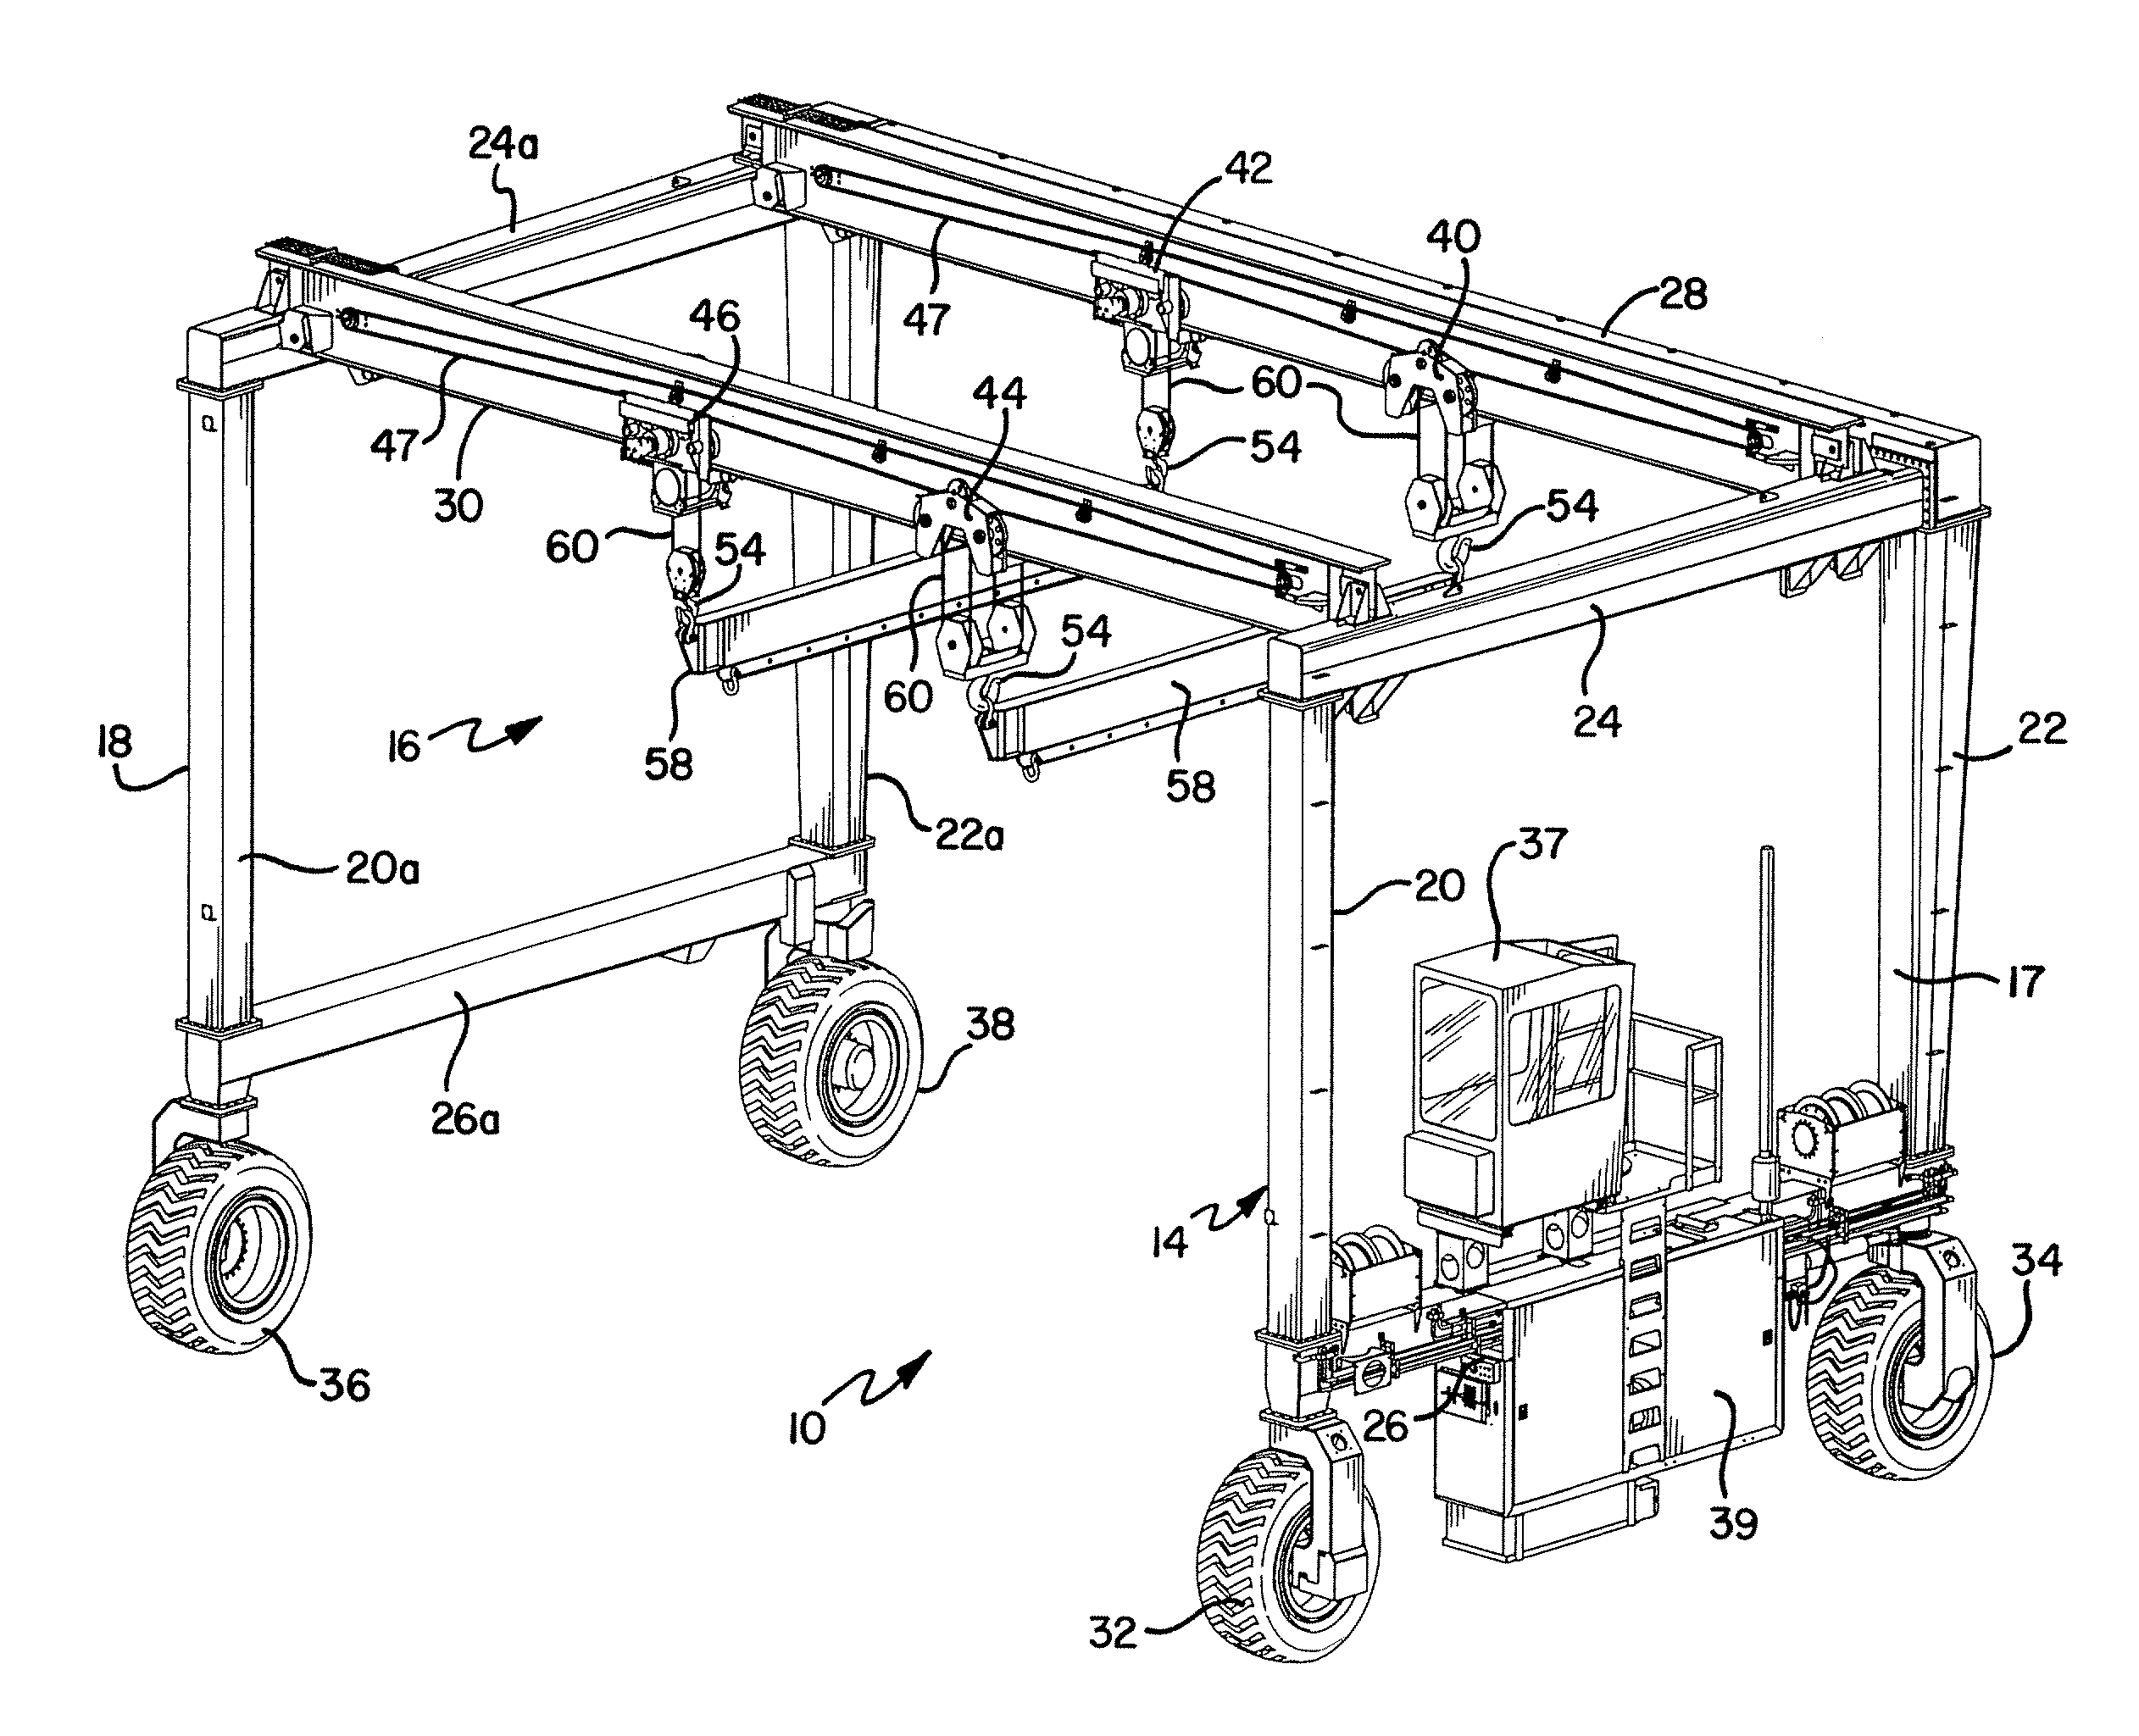 Powered auxiliary hoist mechanism for a gantry crane